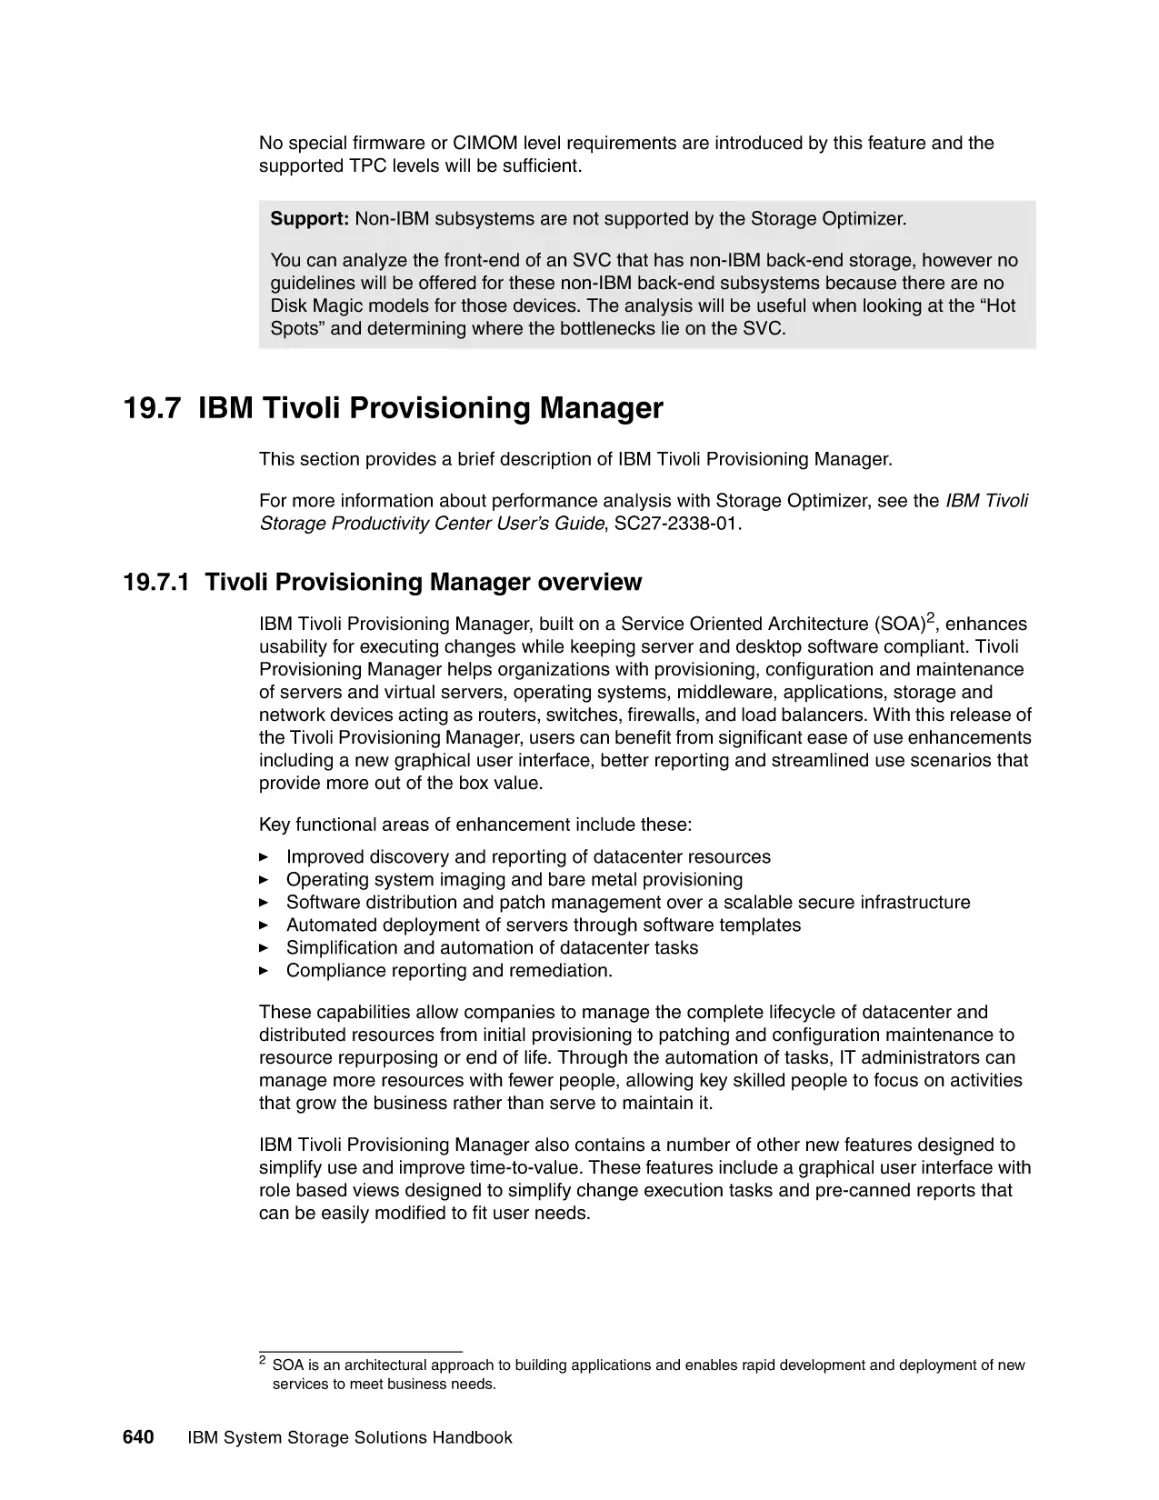 19.7 IBM Tivoli Provisioning Manager
19.7.1 Tivoli Provisioning Manager overview